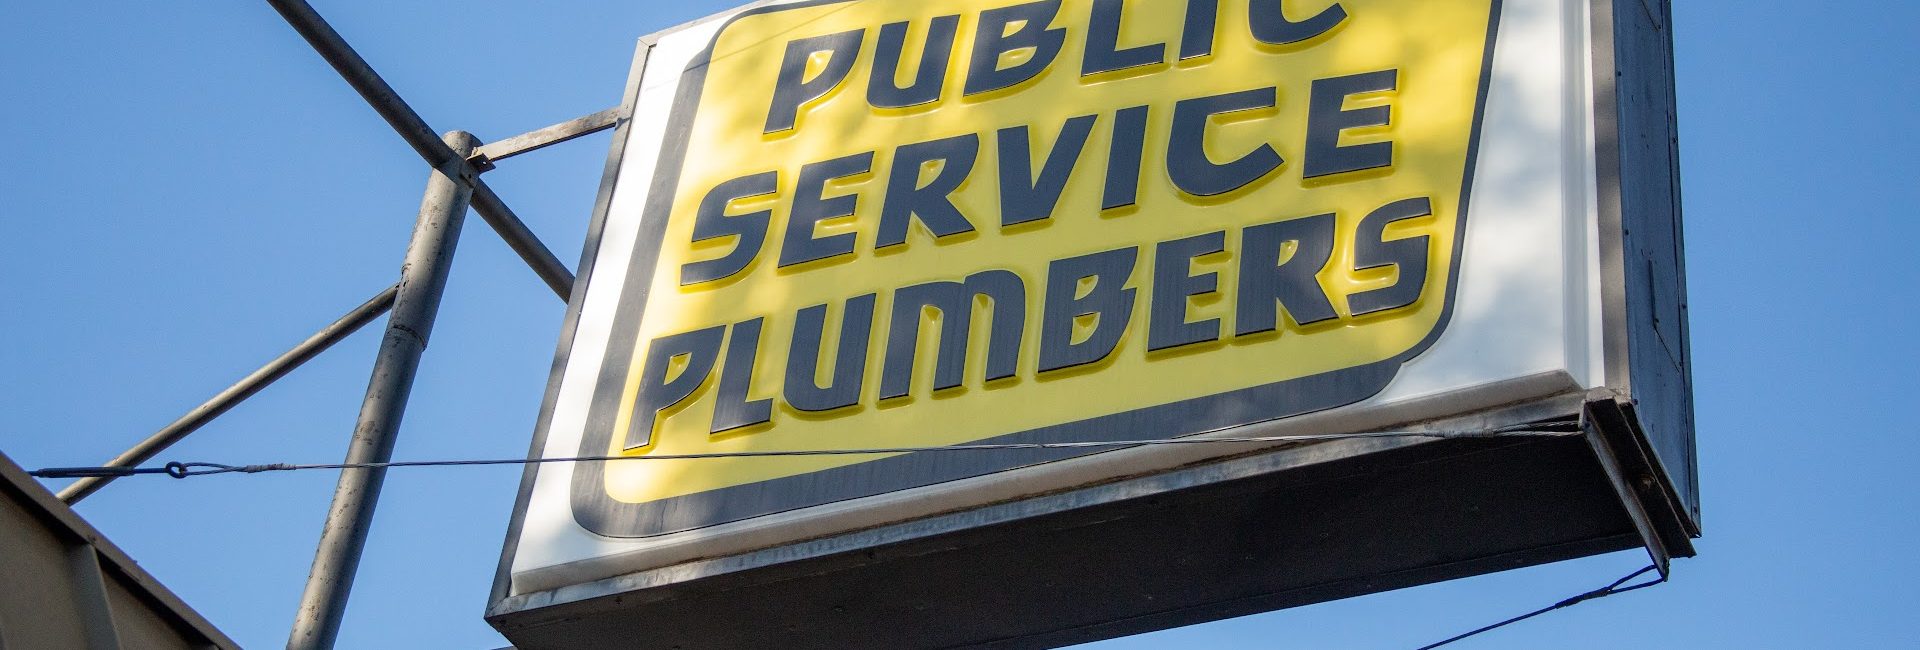 Public Service Plumbers 2